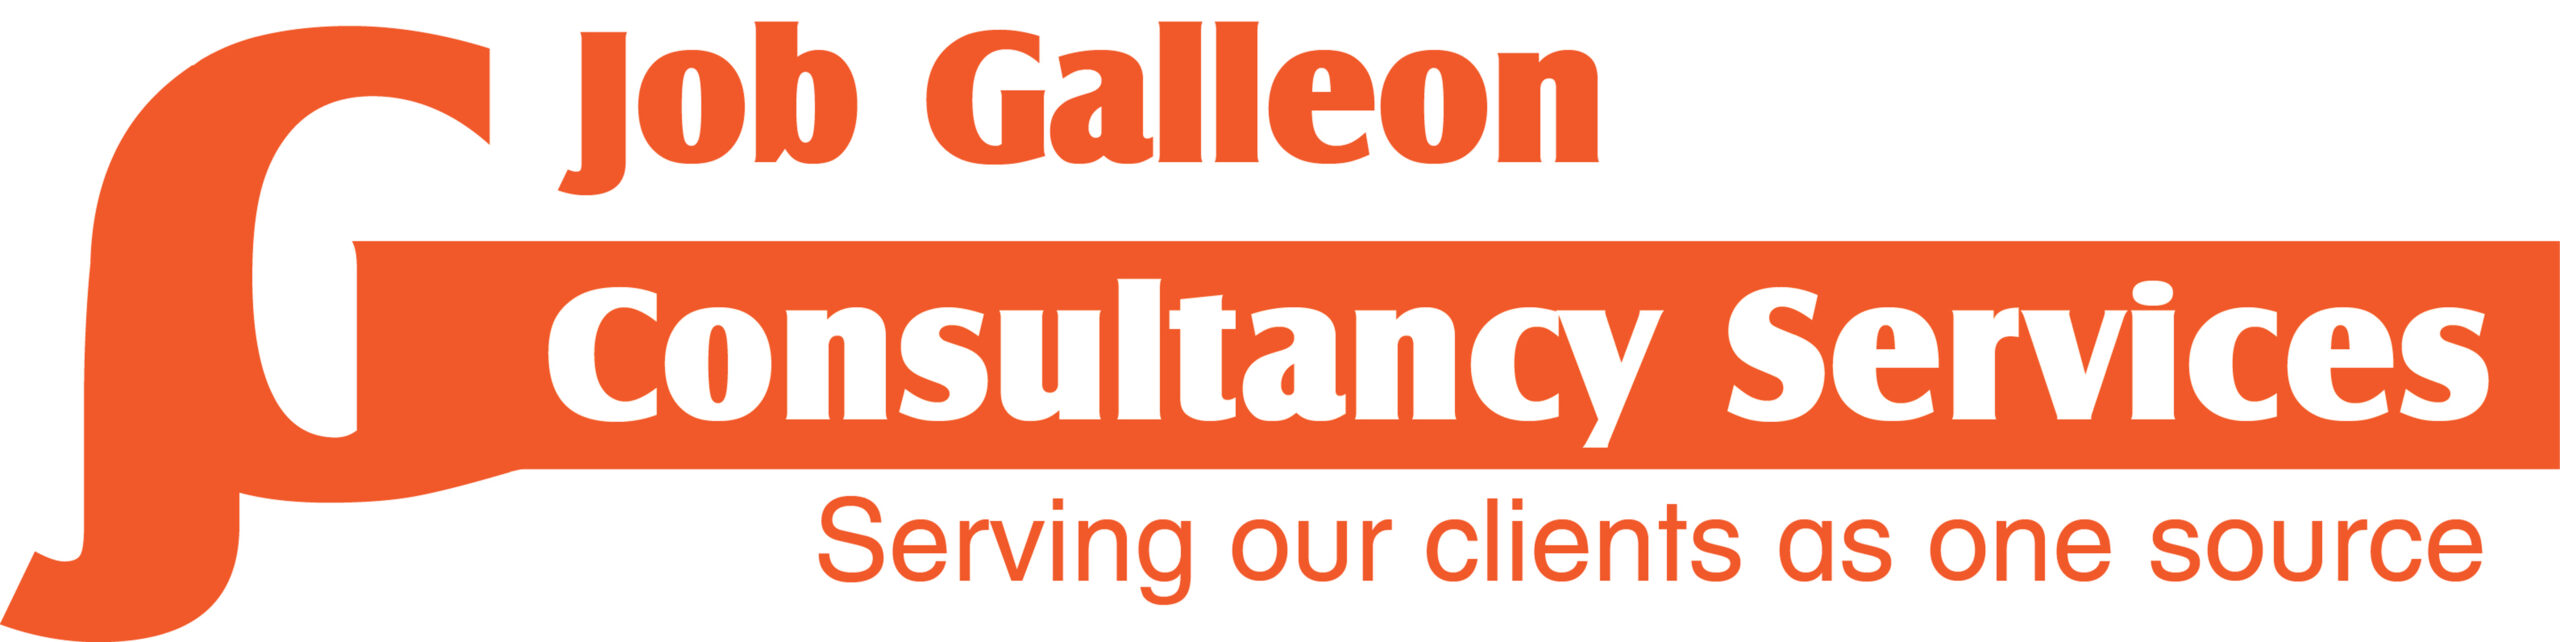 Job Galleon Consultancy Services 